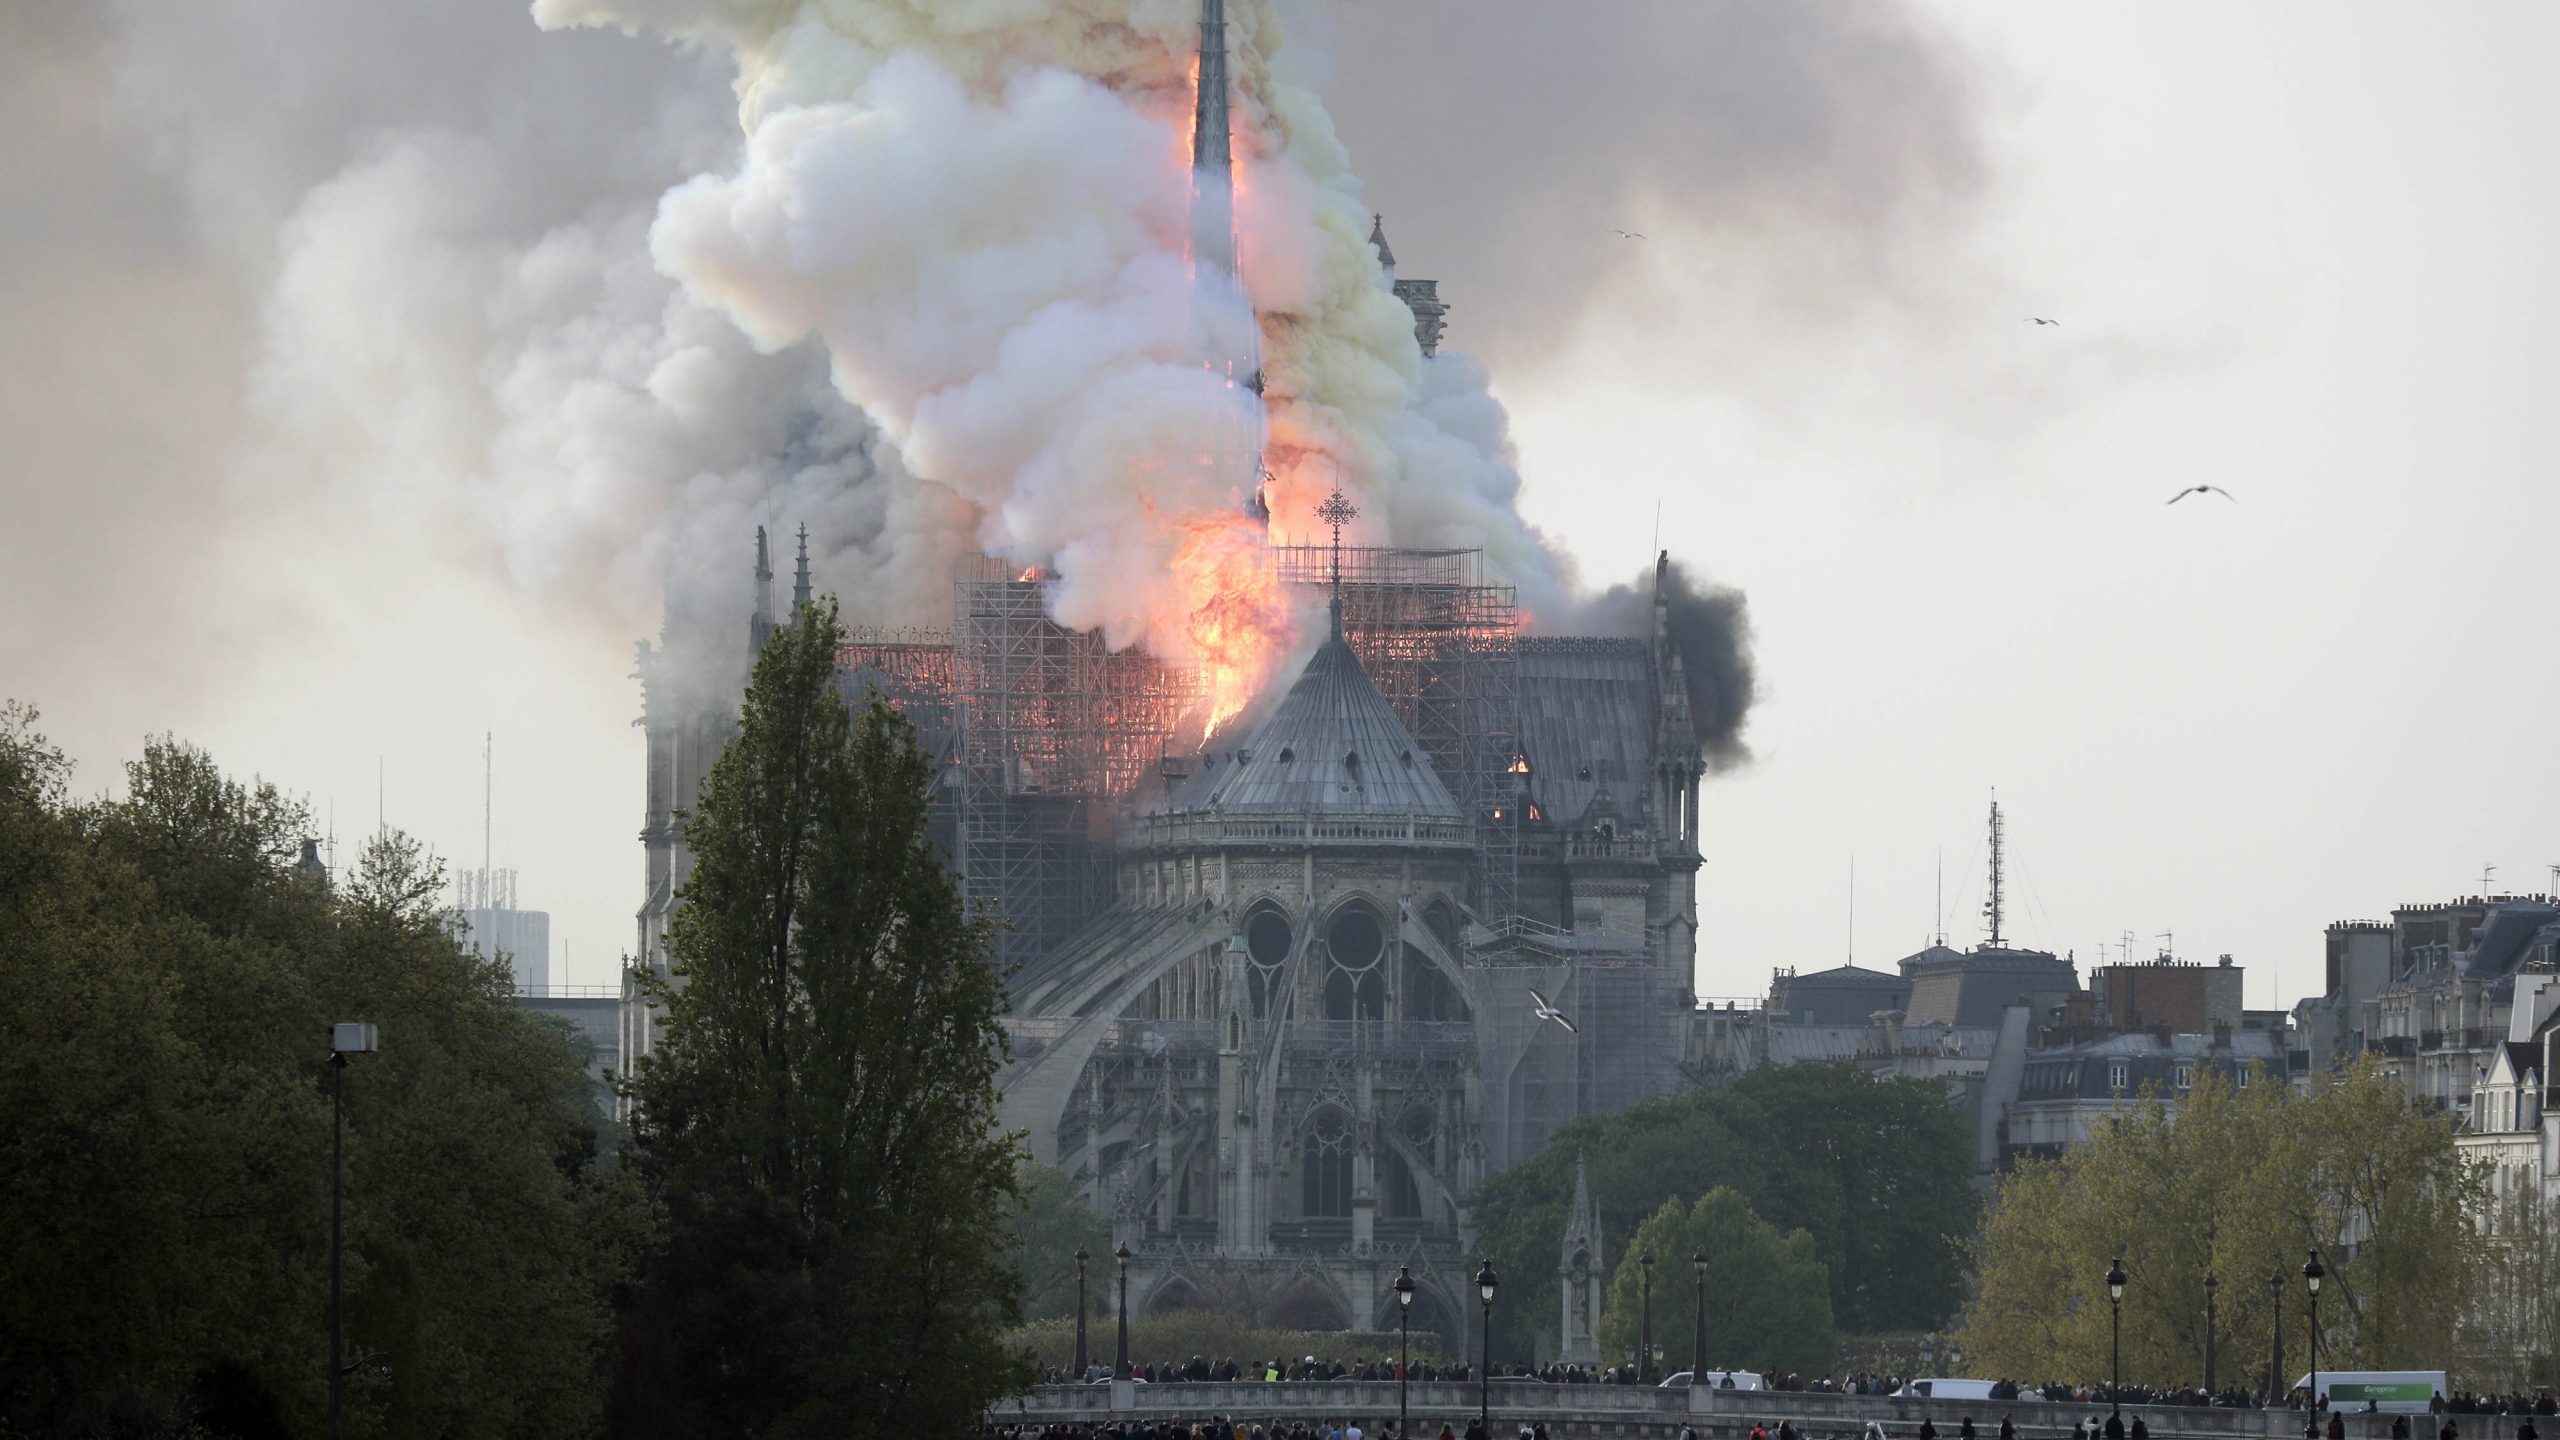 Parisko tužilaštvo: Ništa ne ukazuje da je požar na katedrali Notr Dam bio voljni akt 1